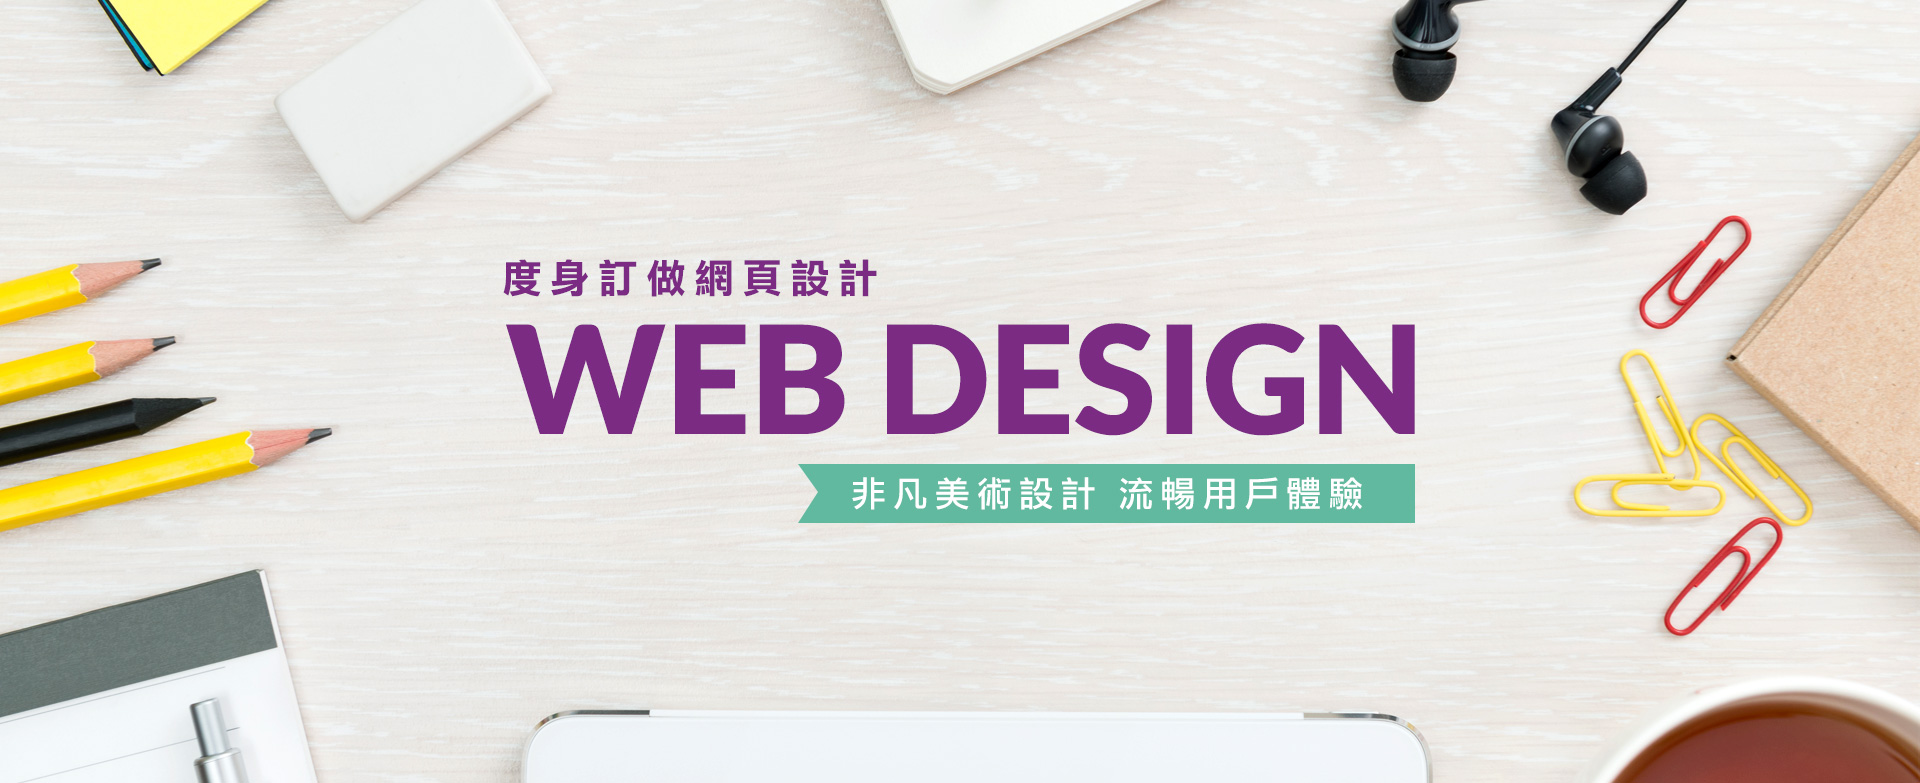 Description: DBWebs San Francisco Top Web Design